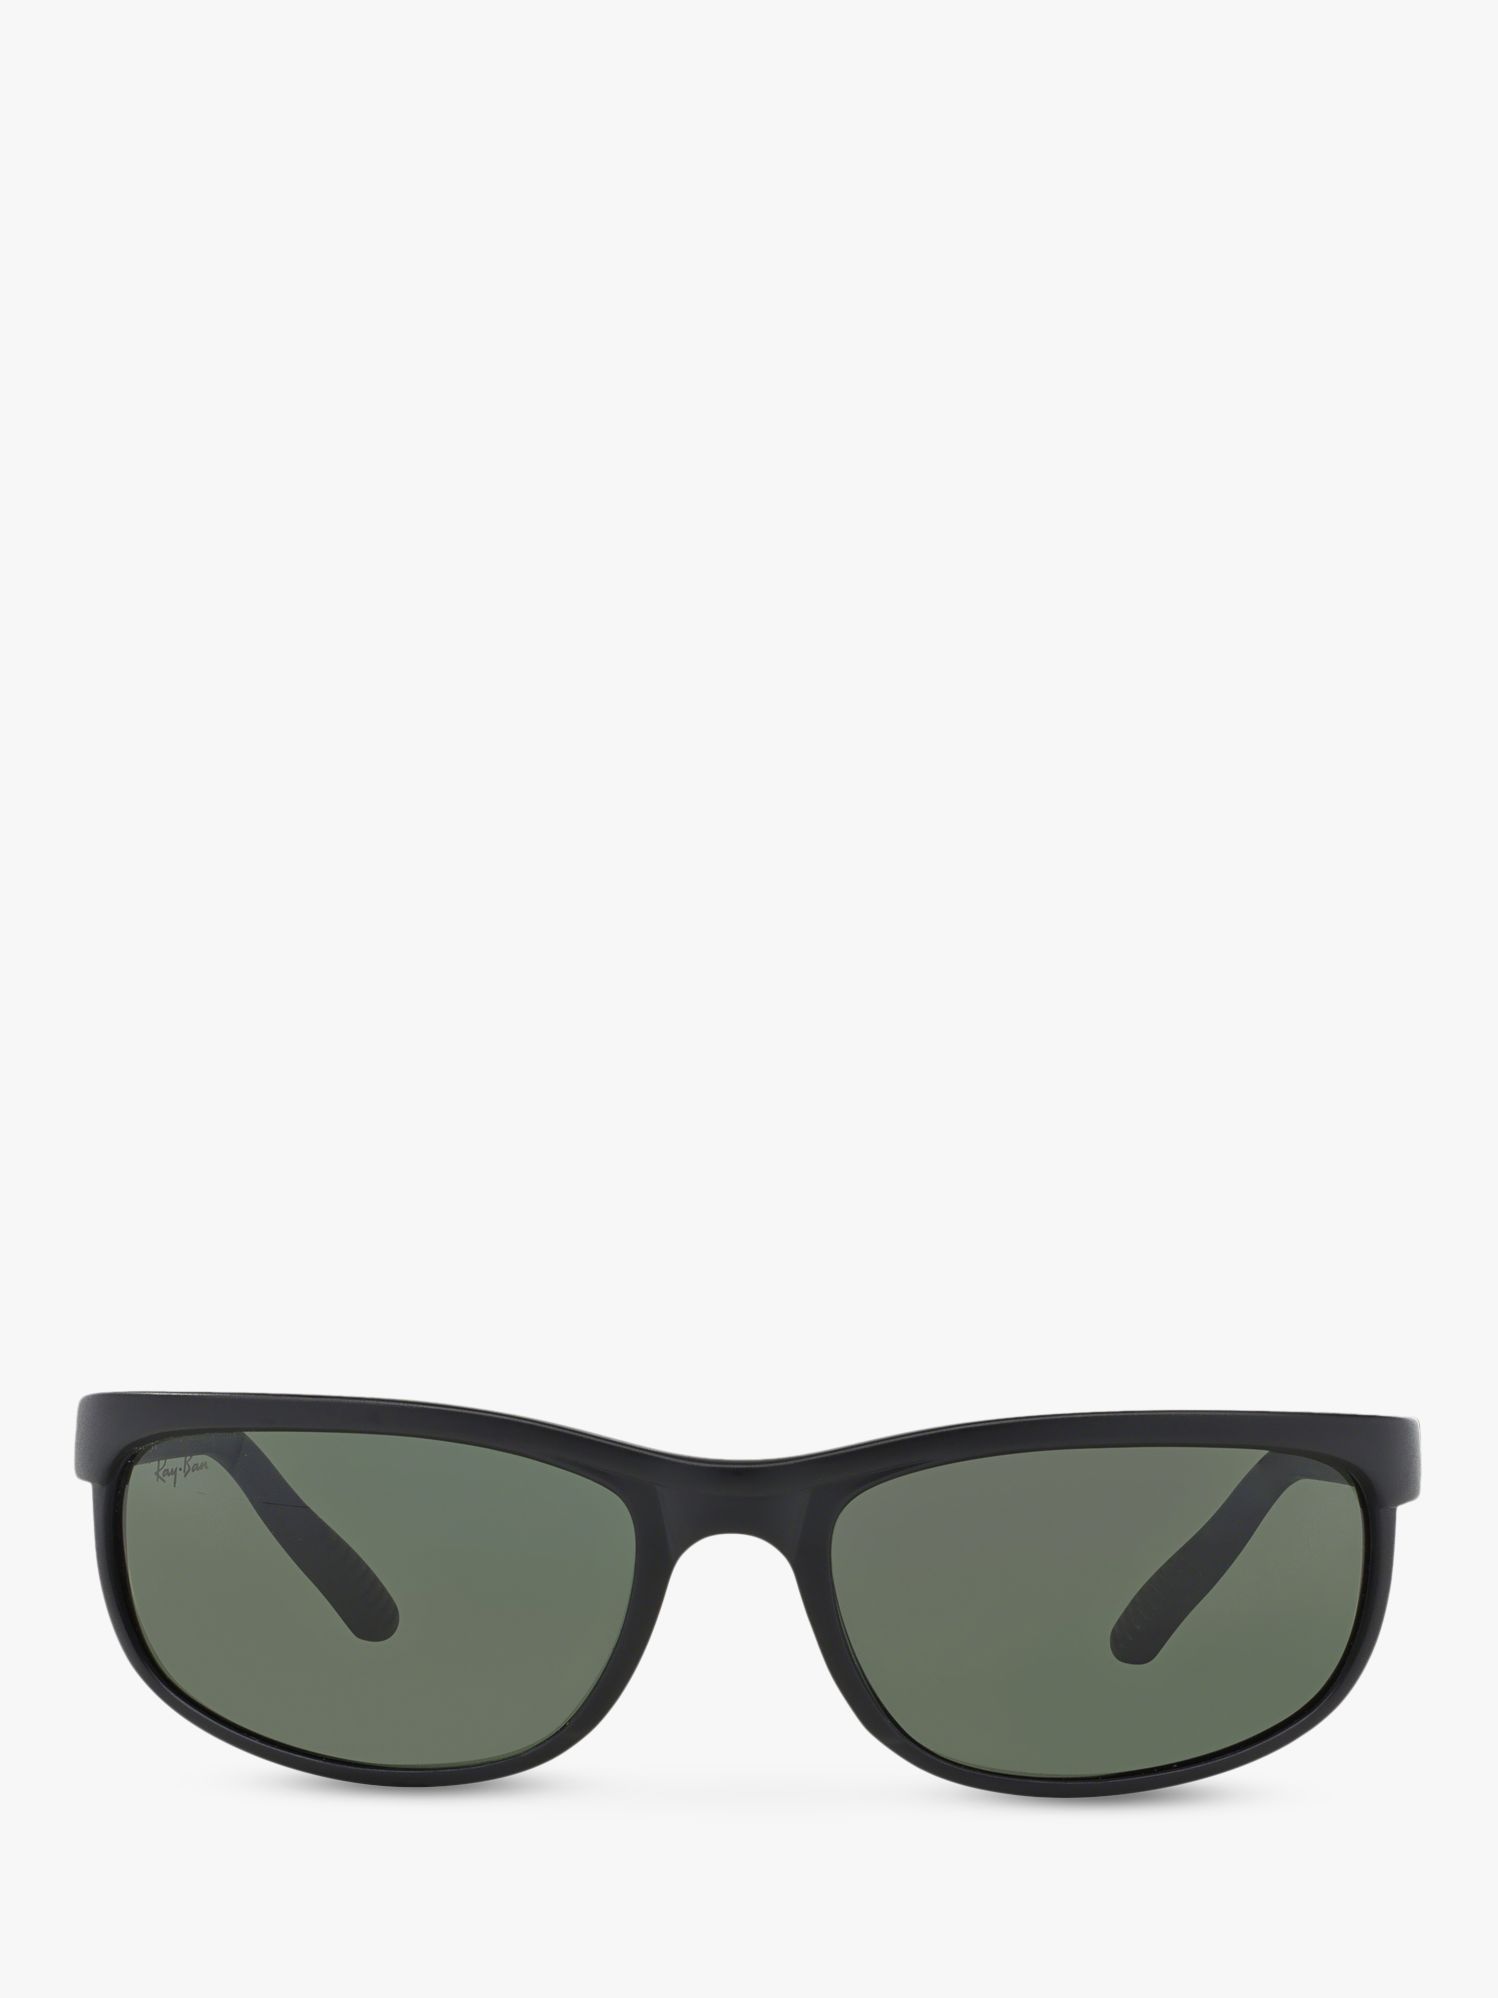 Buy Ray-Ban RB2027 Men's Predator 2 Rectangular Sunglasses, Matte Black/Green Online at johnlewis.com